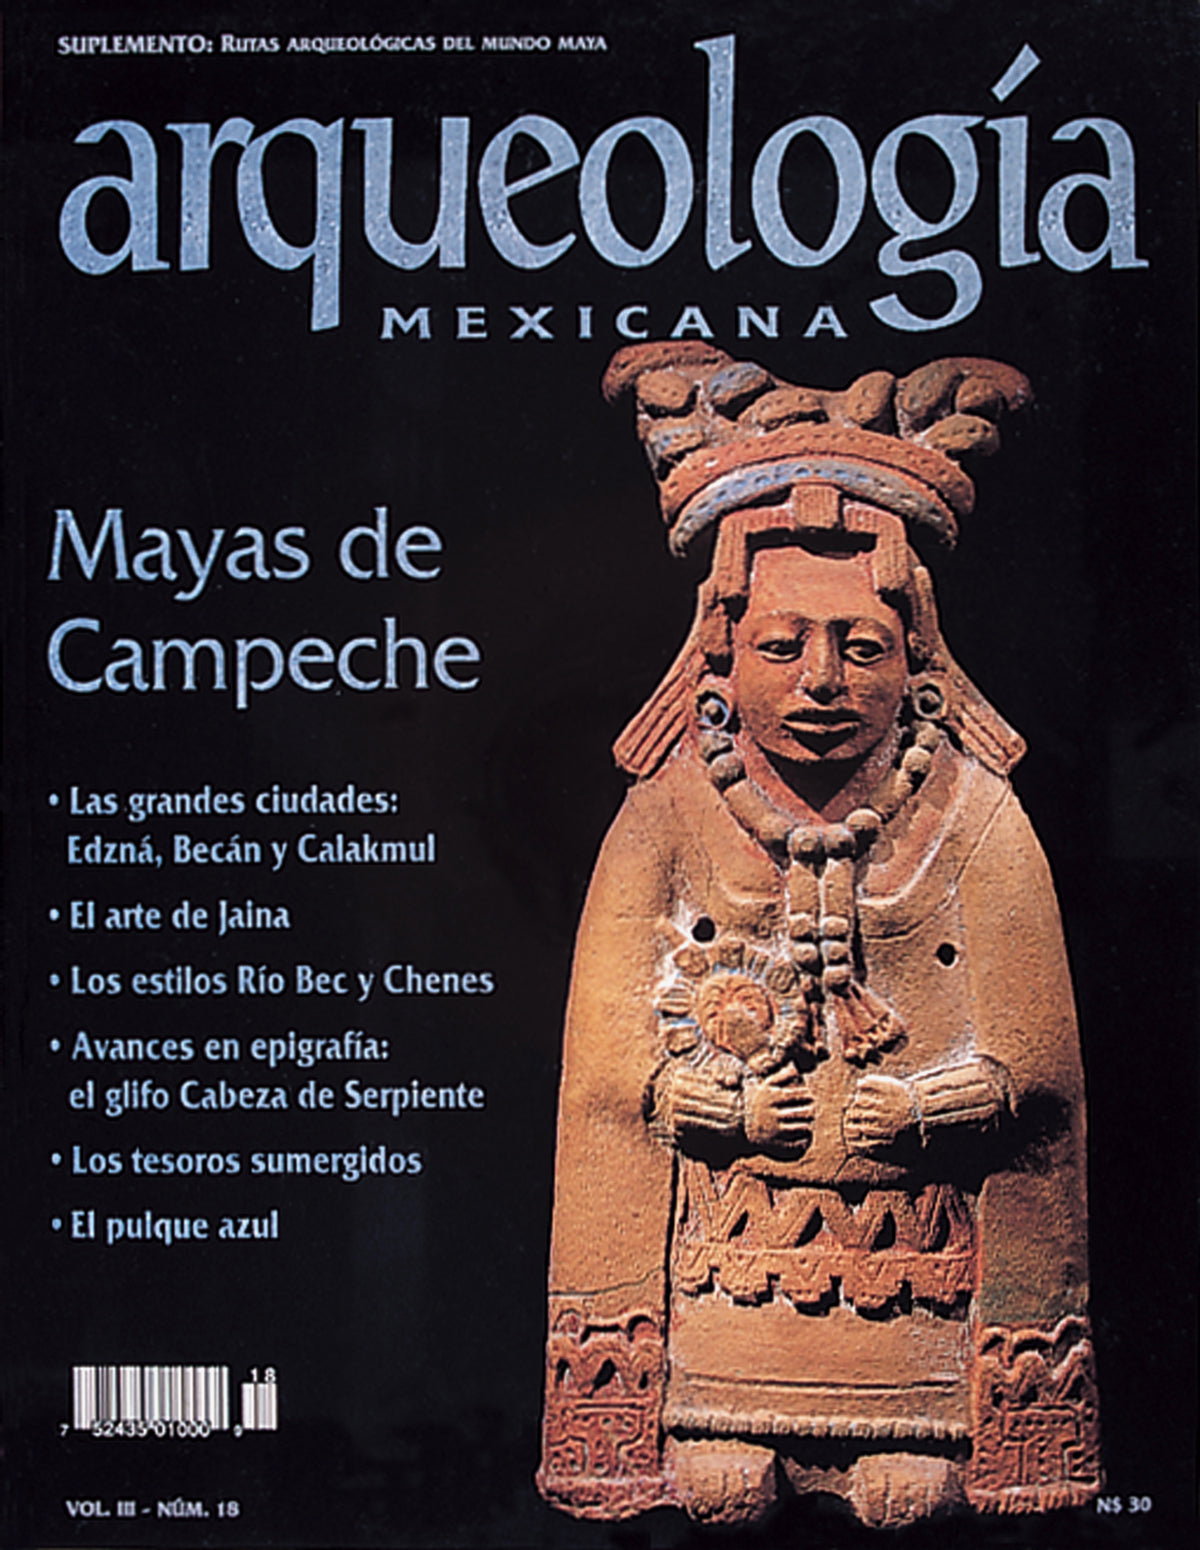 Mayas de Campeche